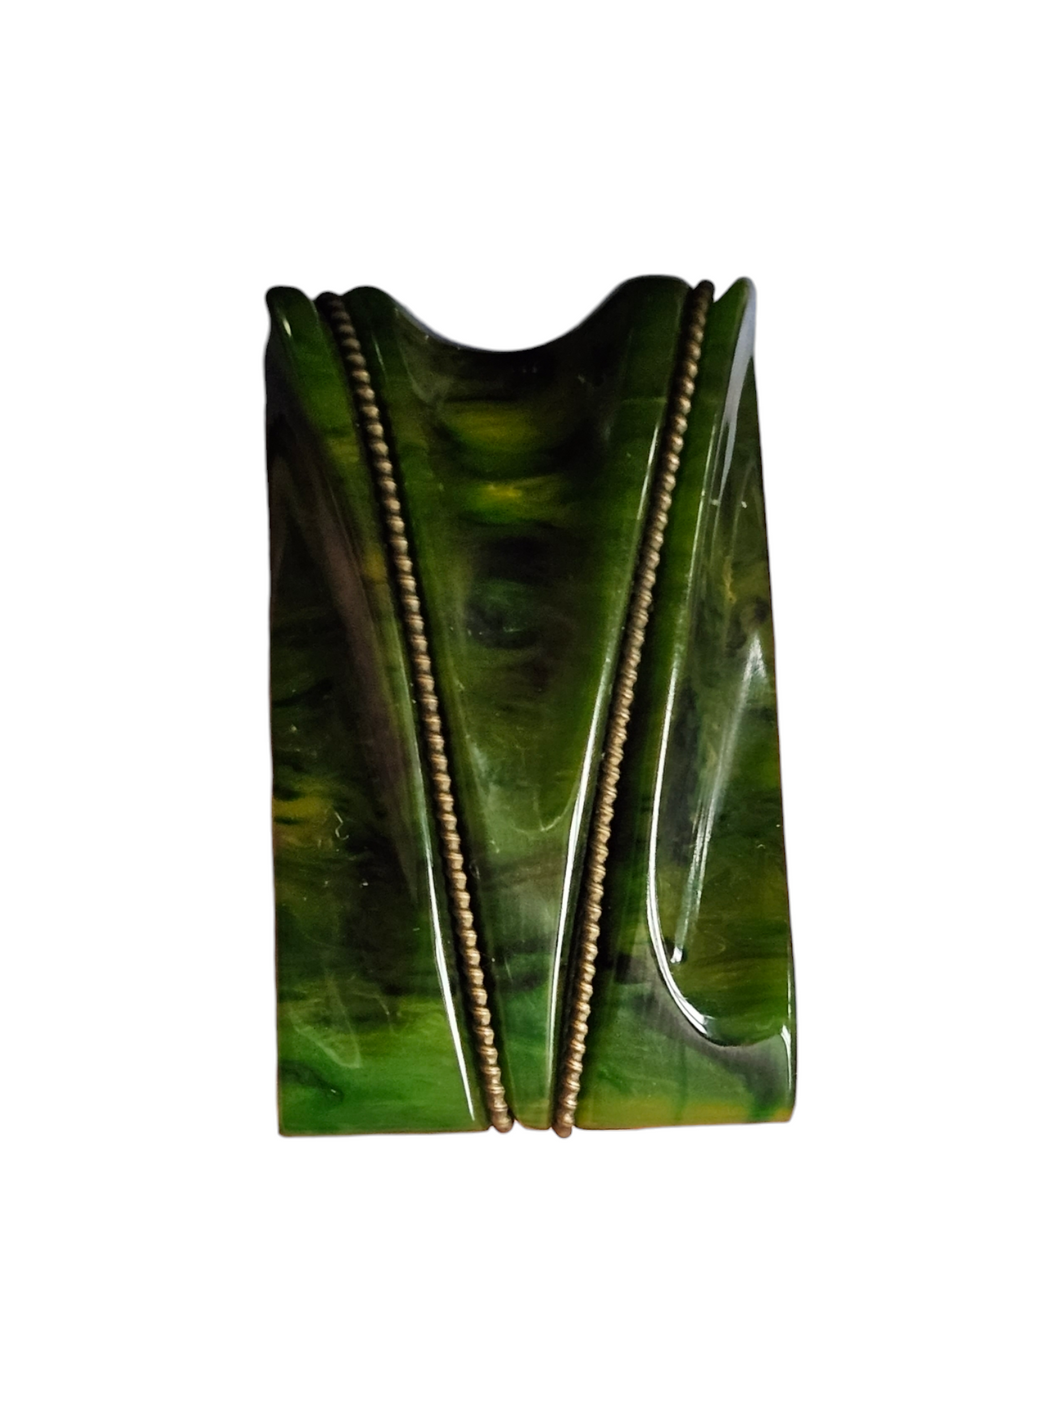 1940s Chunky Green Bakelite and Metal Dress Clip